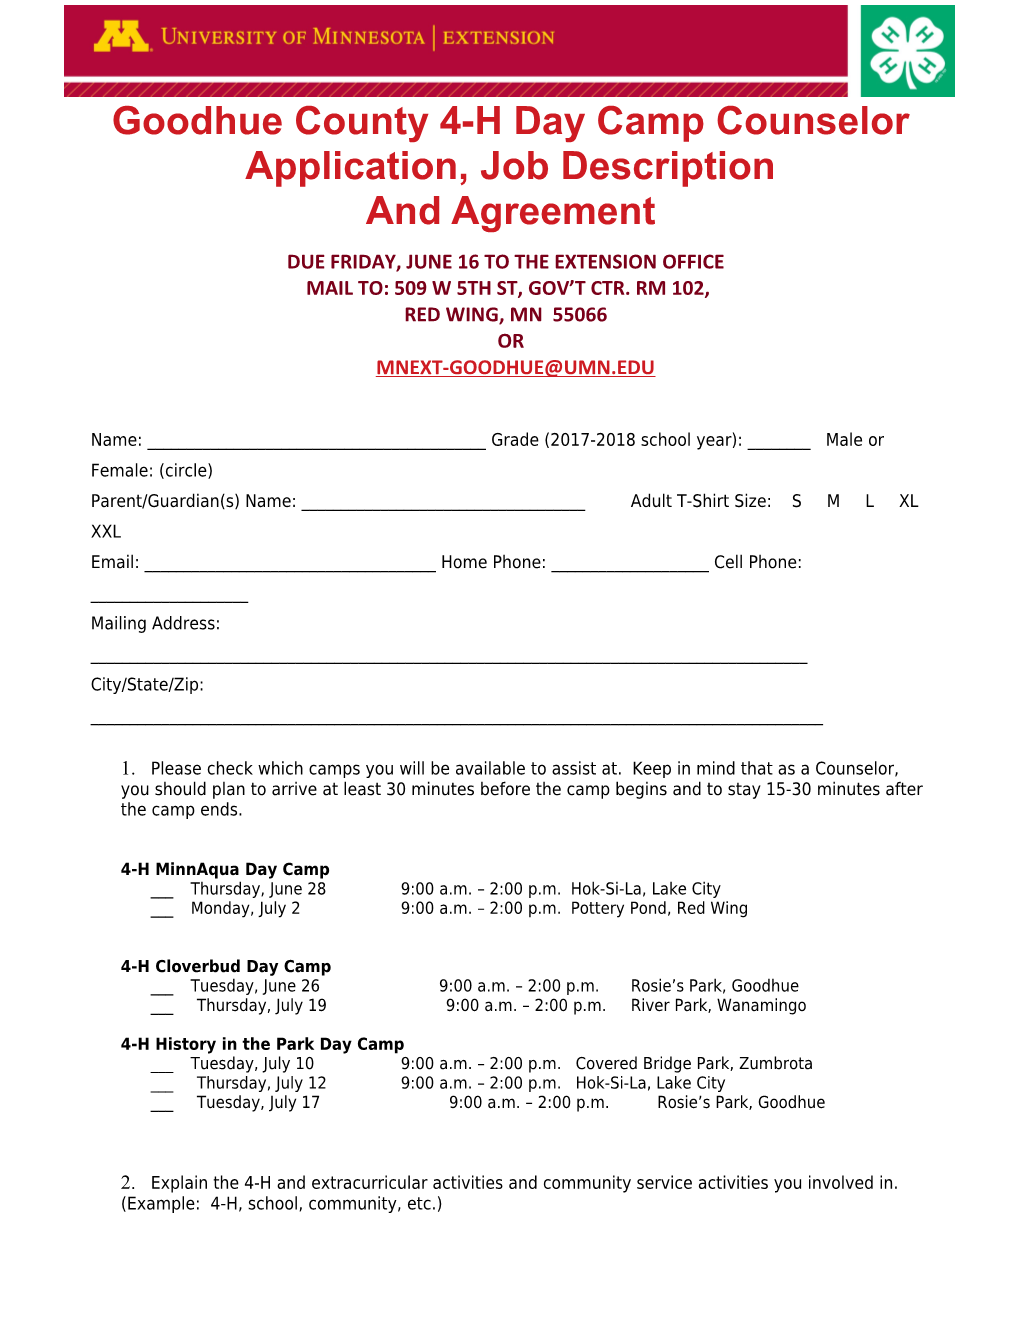 Goodhue County 4-H Day Camp Counselor Application, Job Description